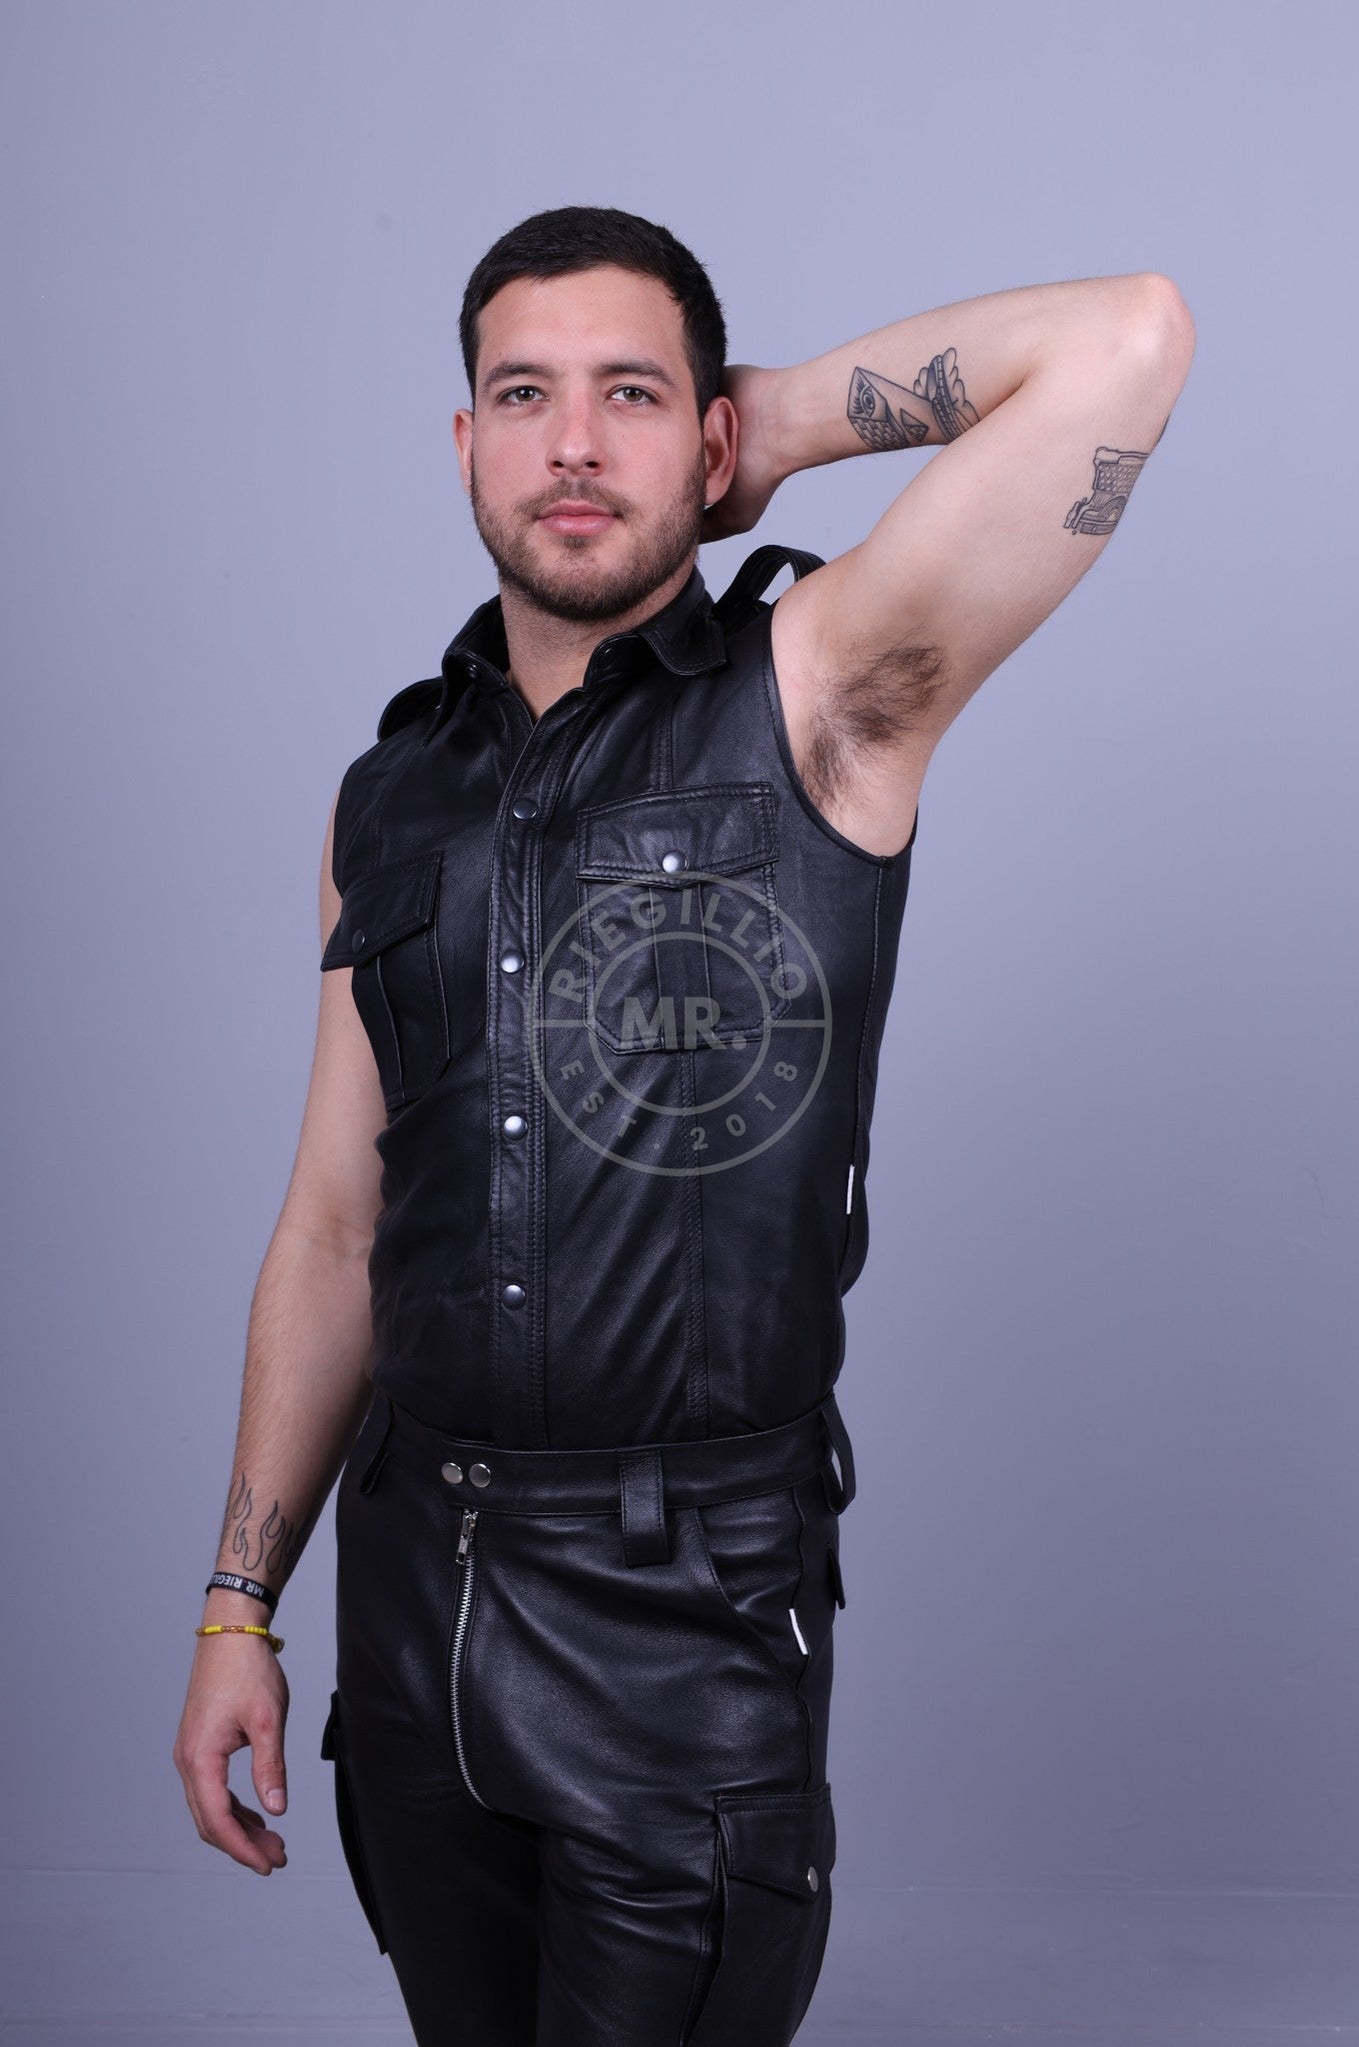 Black Leather Shirt - Sleeveless-at MR. Riegillio